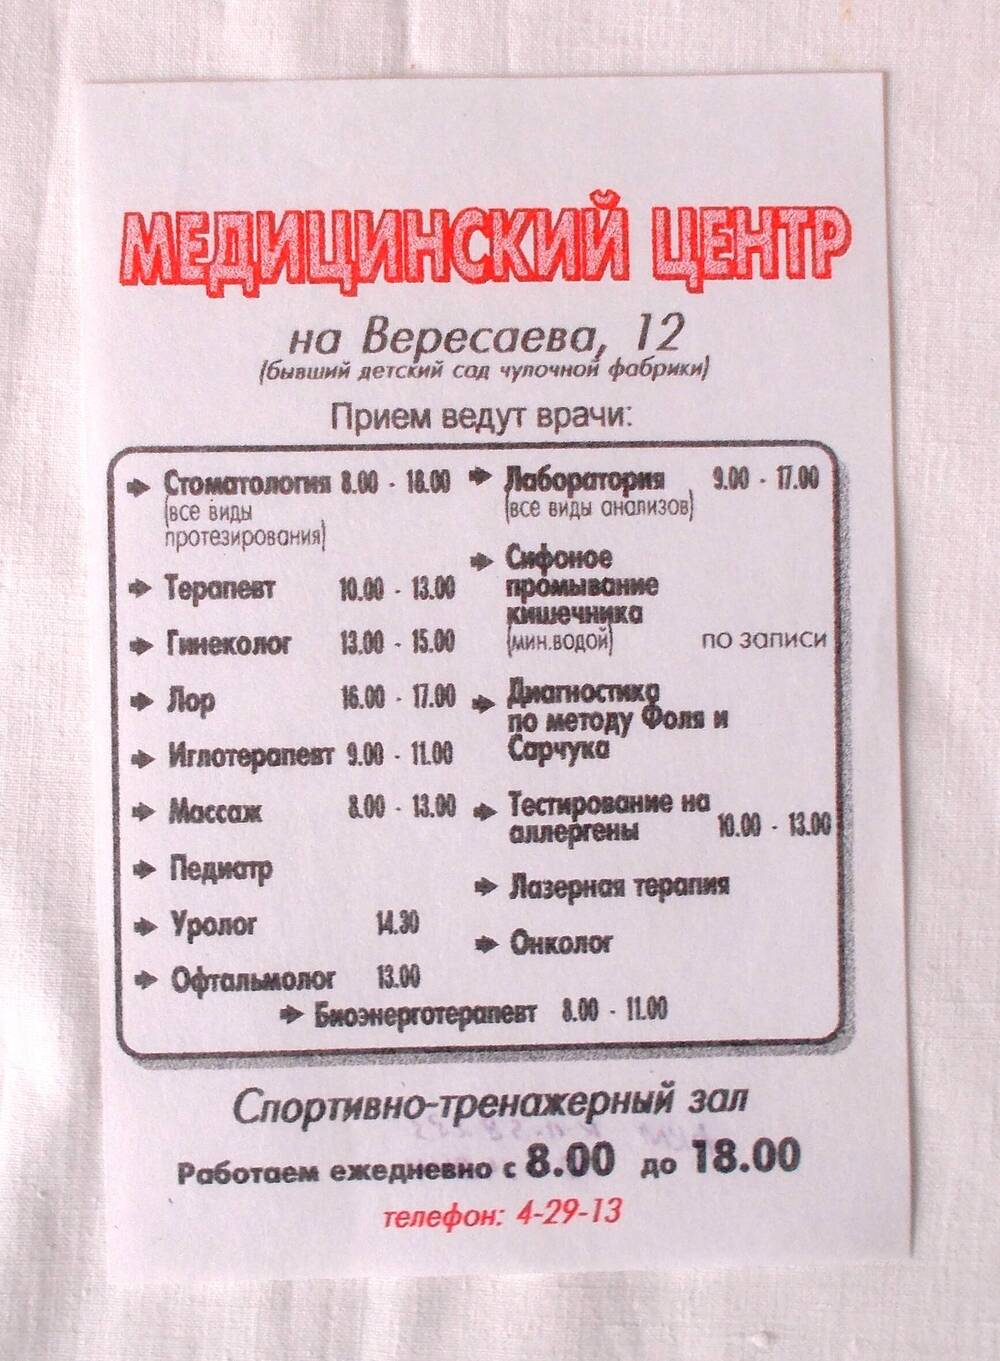 Объявление рекламное «Медицинский центр на Вересаева, 12». 2002 г.